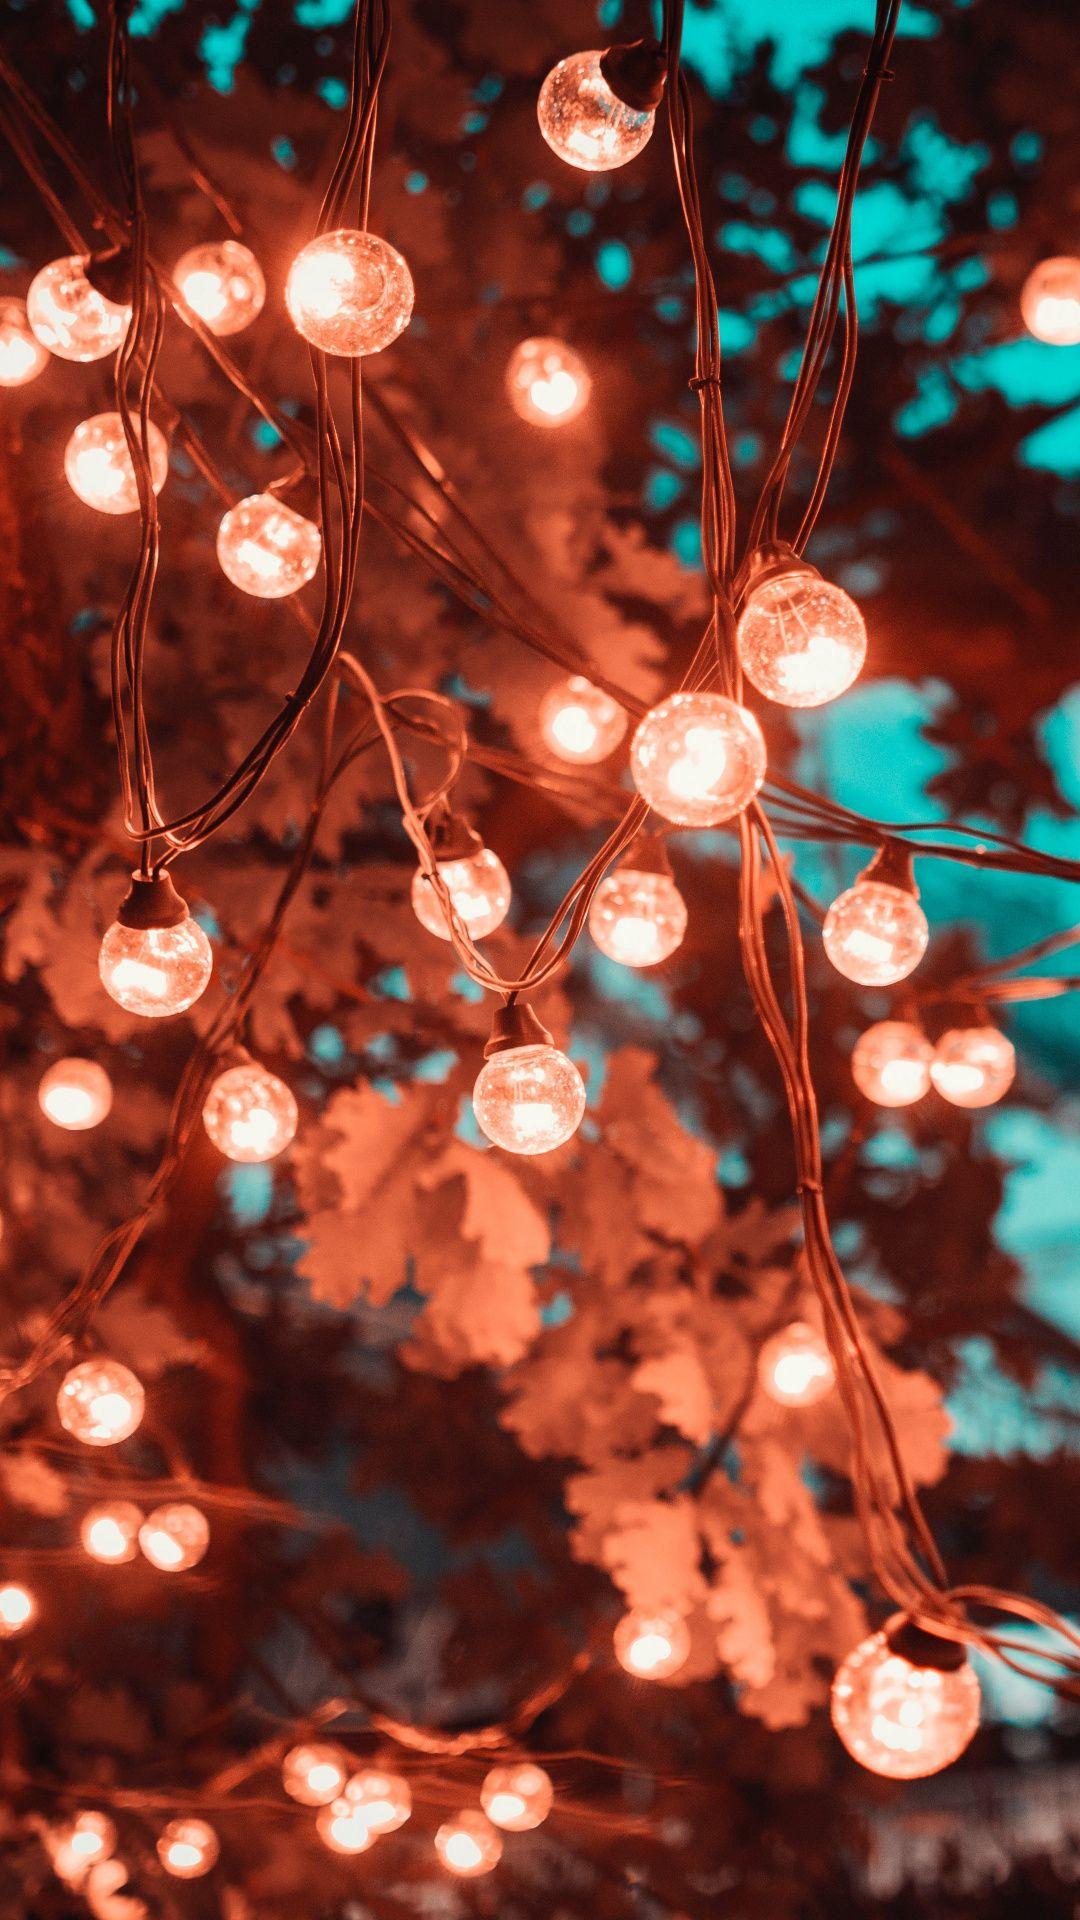 Wallpaper light emitting diode, lighting, christmas lights, branch, incandescent. iPhone wallpaper lights, Christmas phone wallpaper, Christmas lights wallpaper